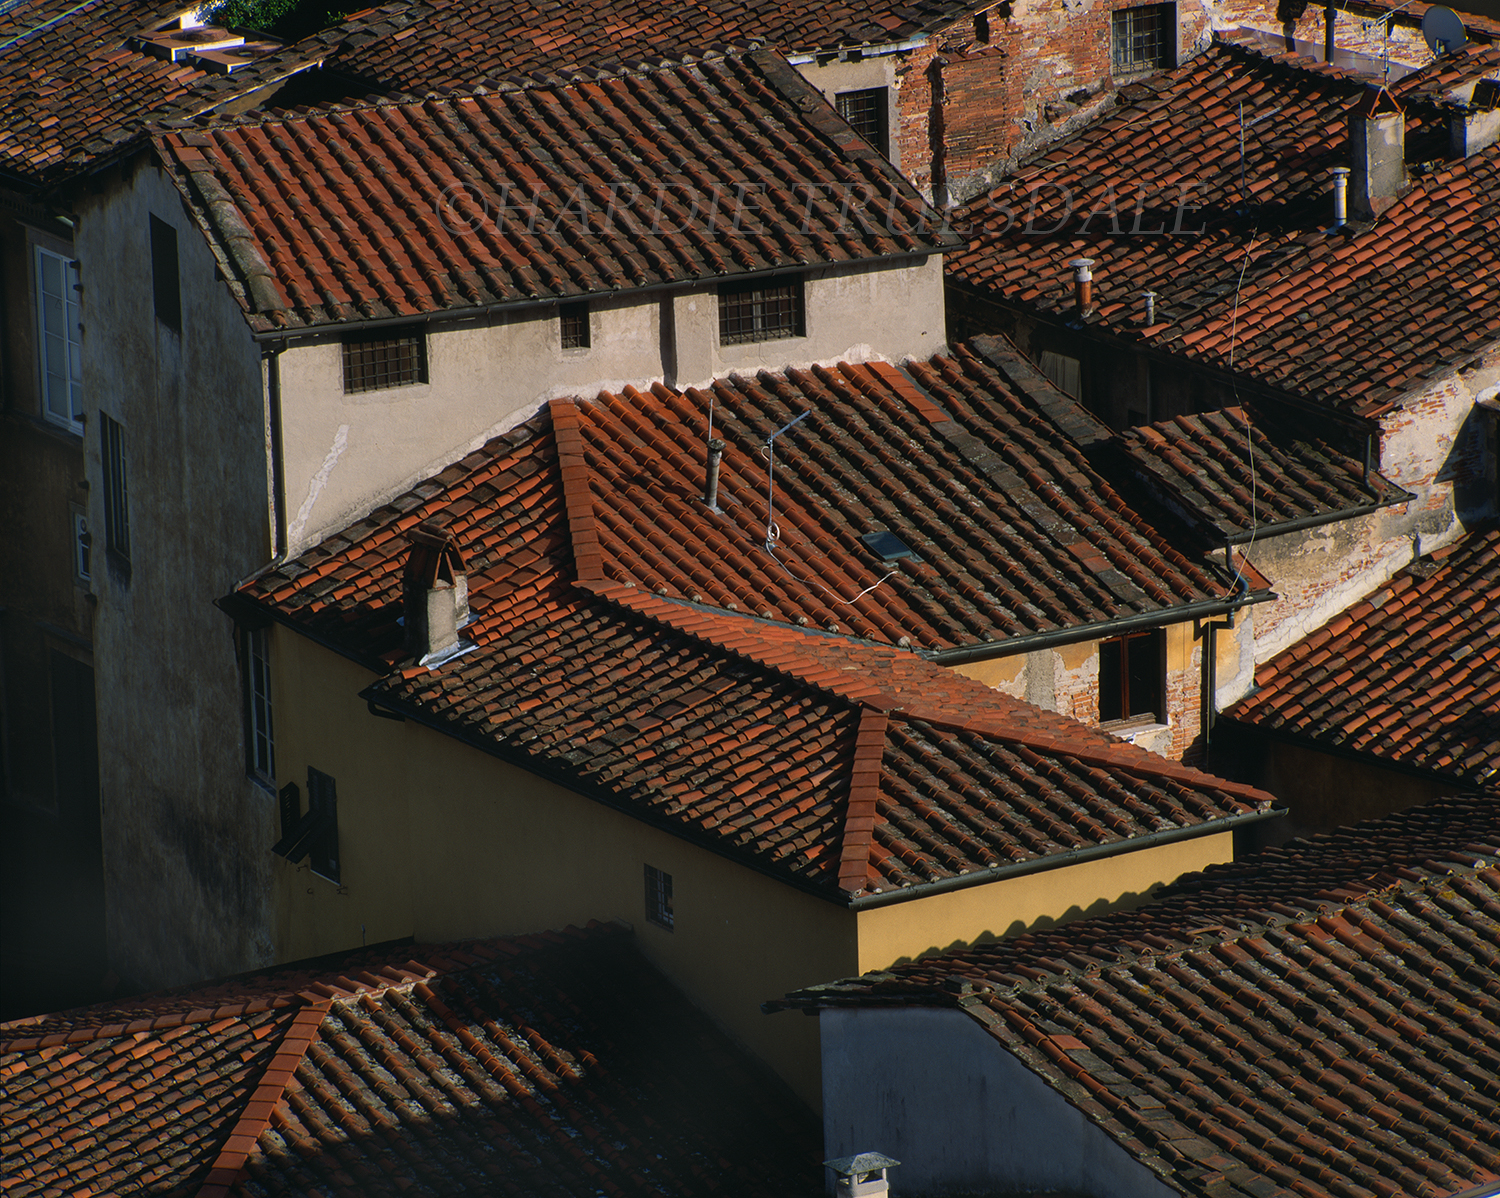  Ity#004 "Rooftops of Luca",&nbsp;Tuscany, Italy 